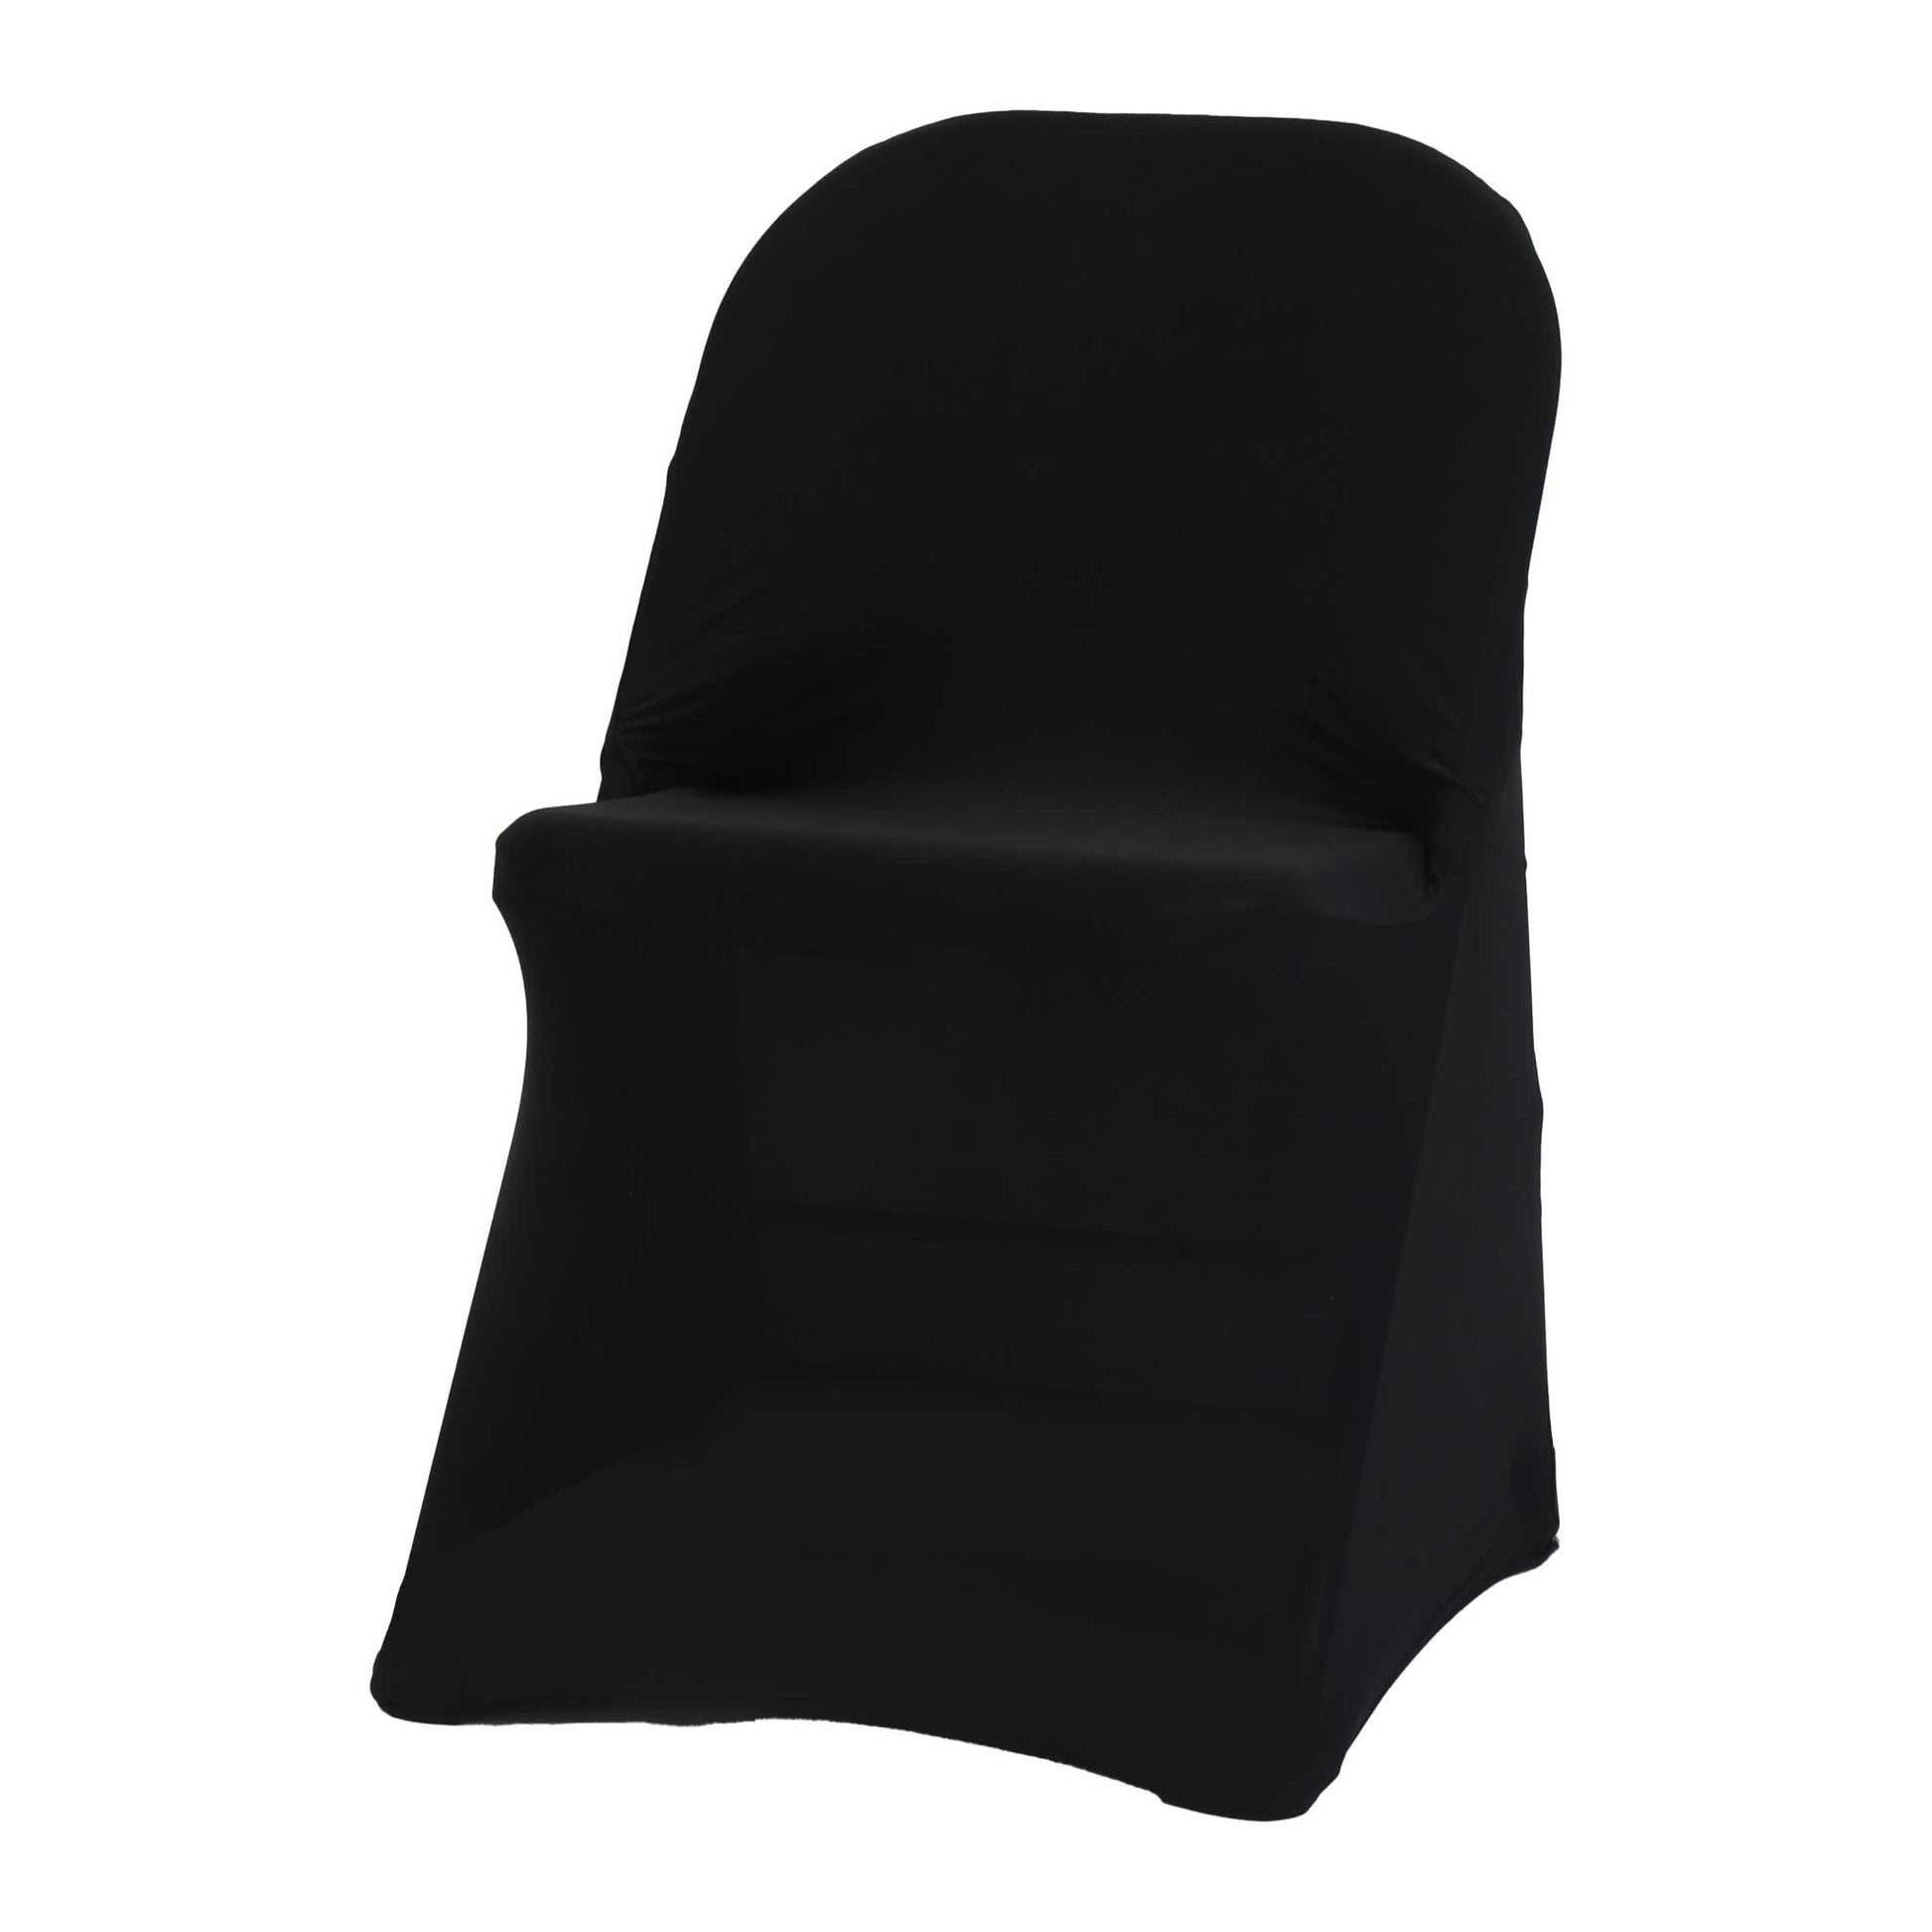 Folding Spandex Chair Cover Black at CV Linens